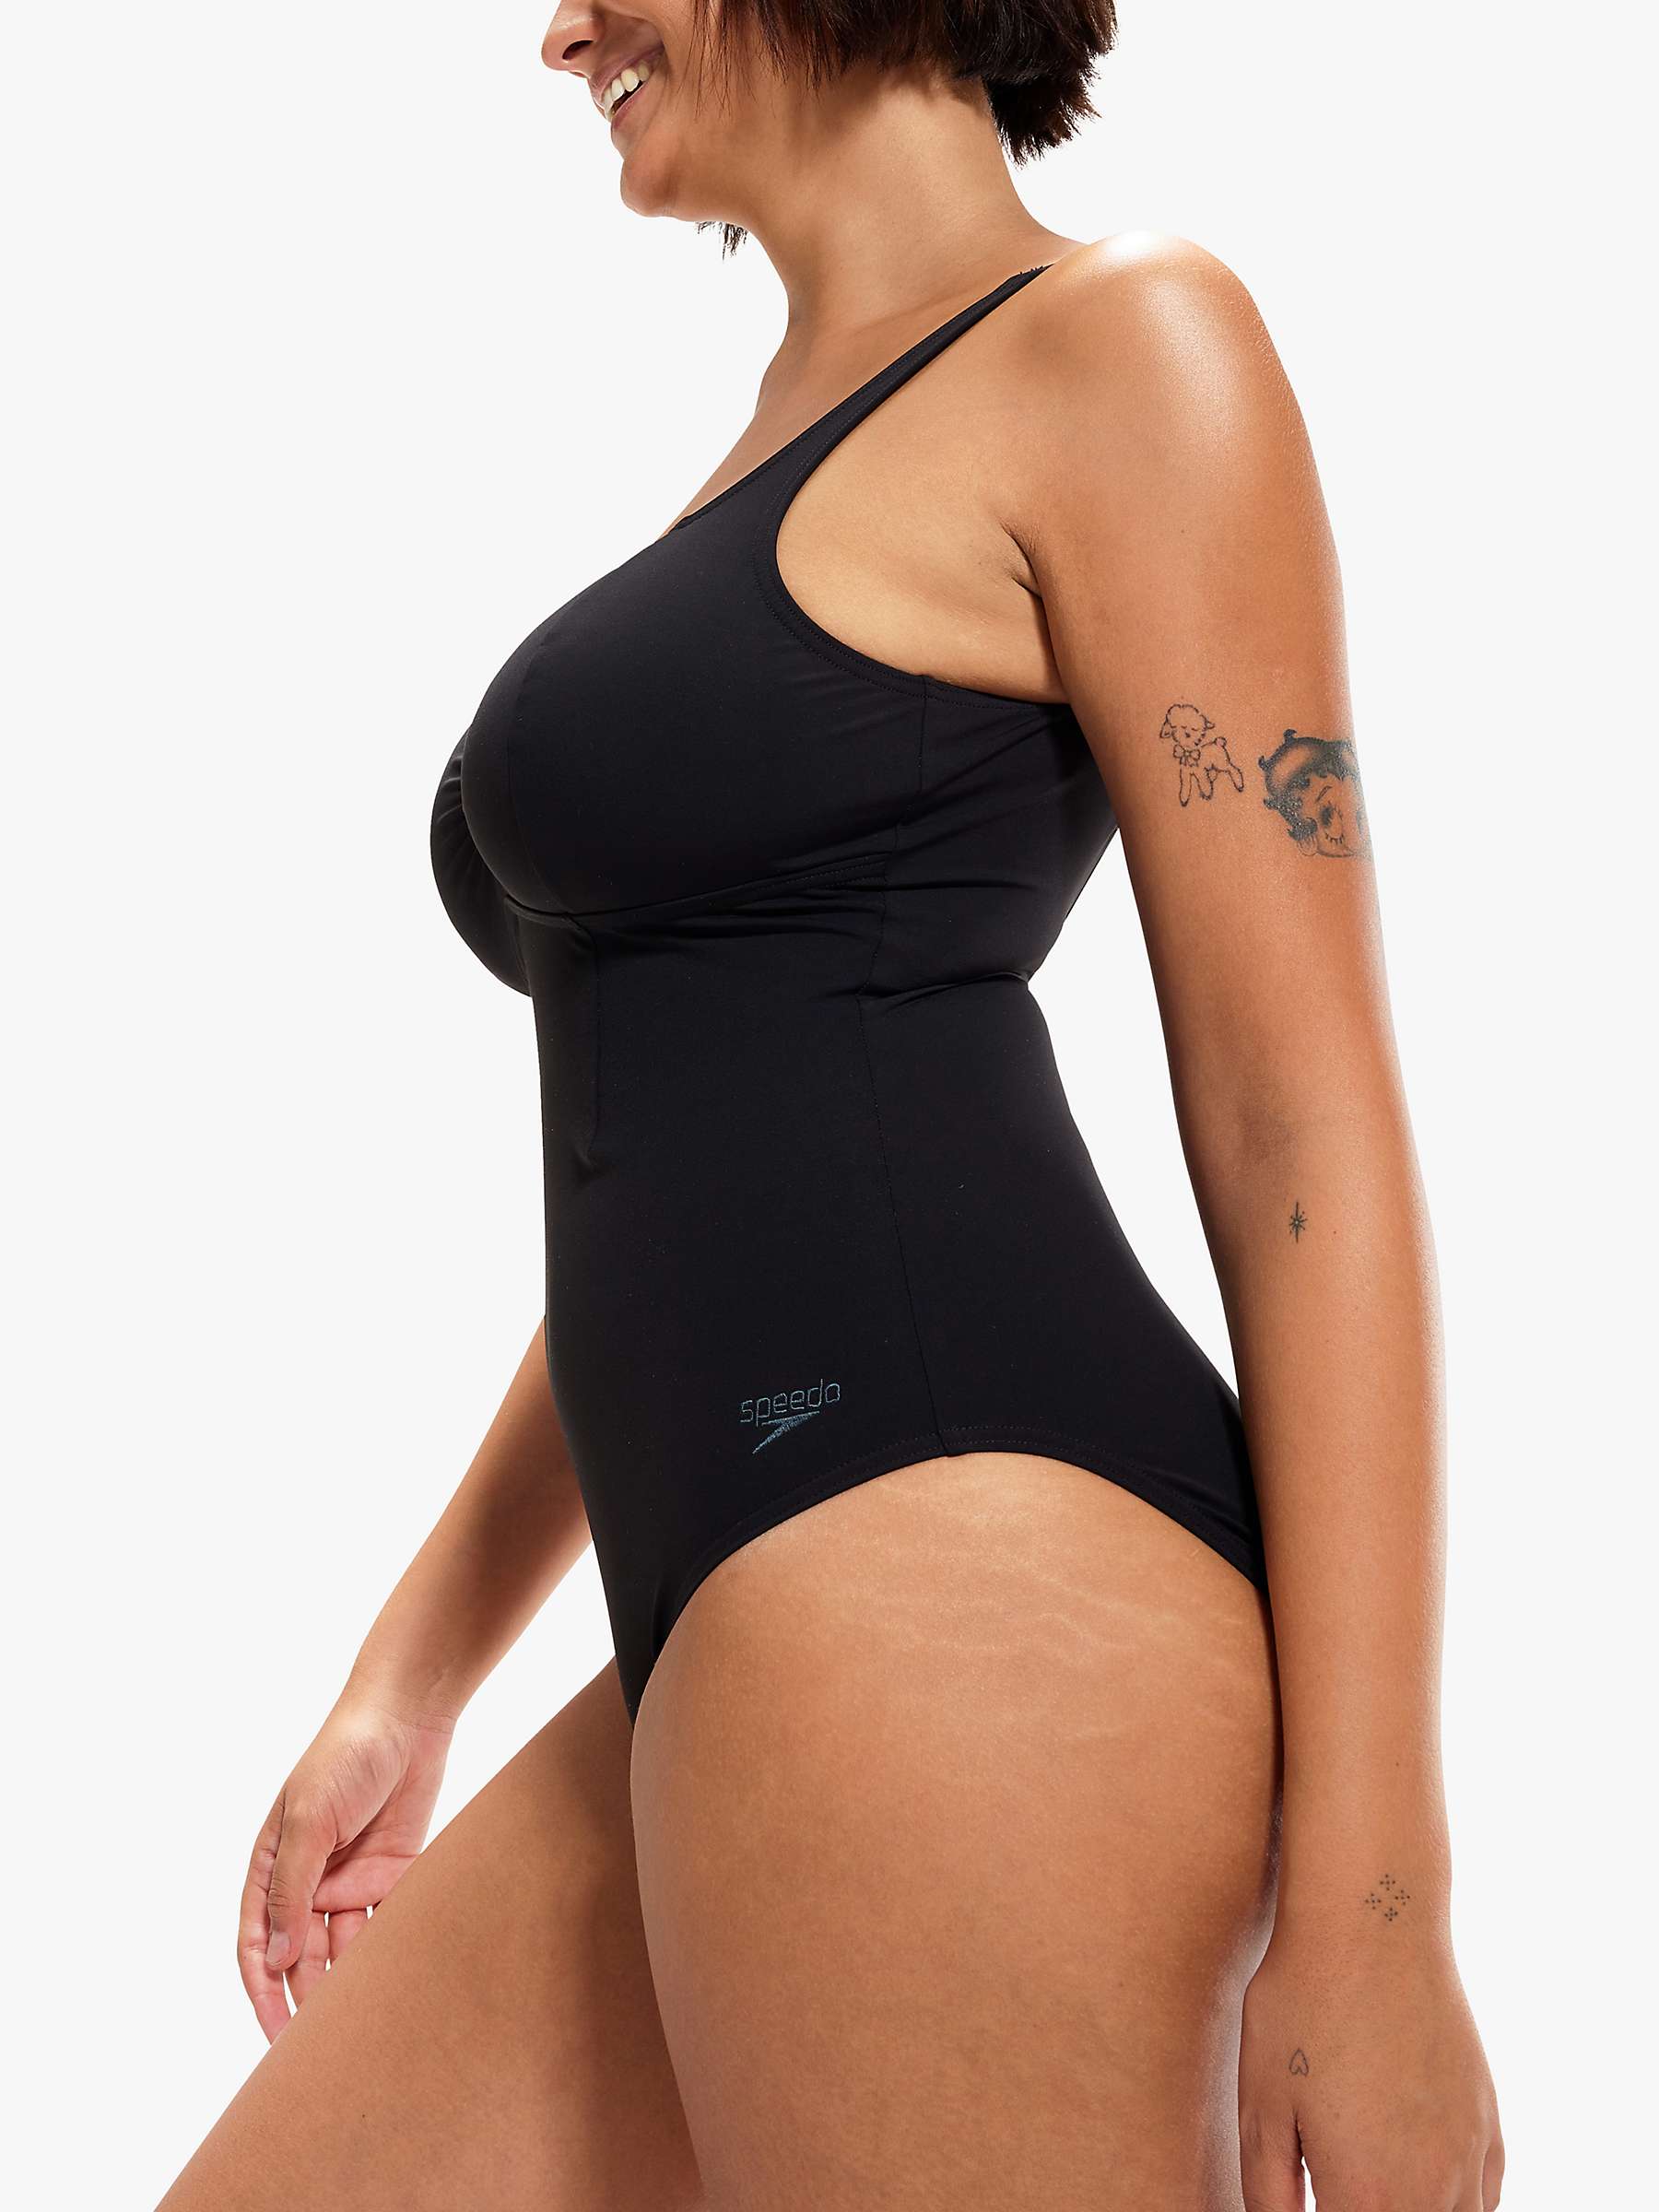 Buy Speedo Shaping AquaNite Swimsuit Online at johnlewis.com